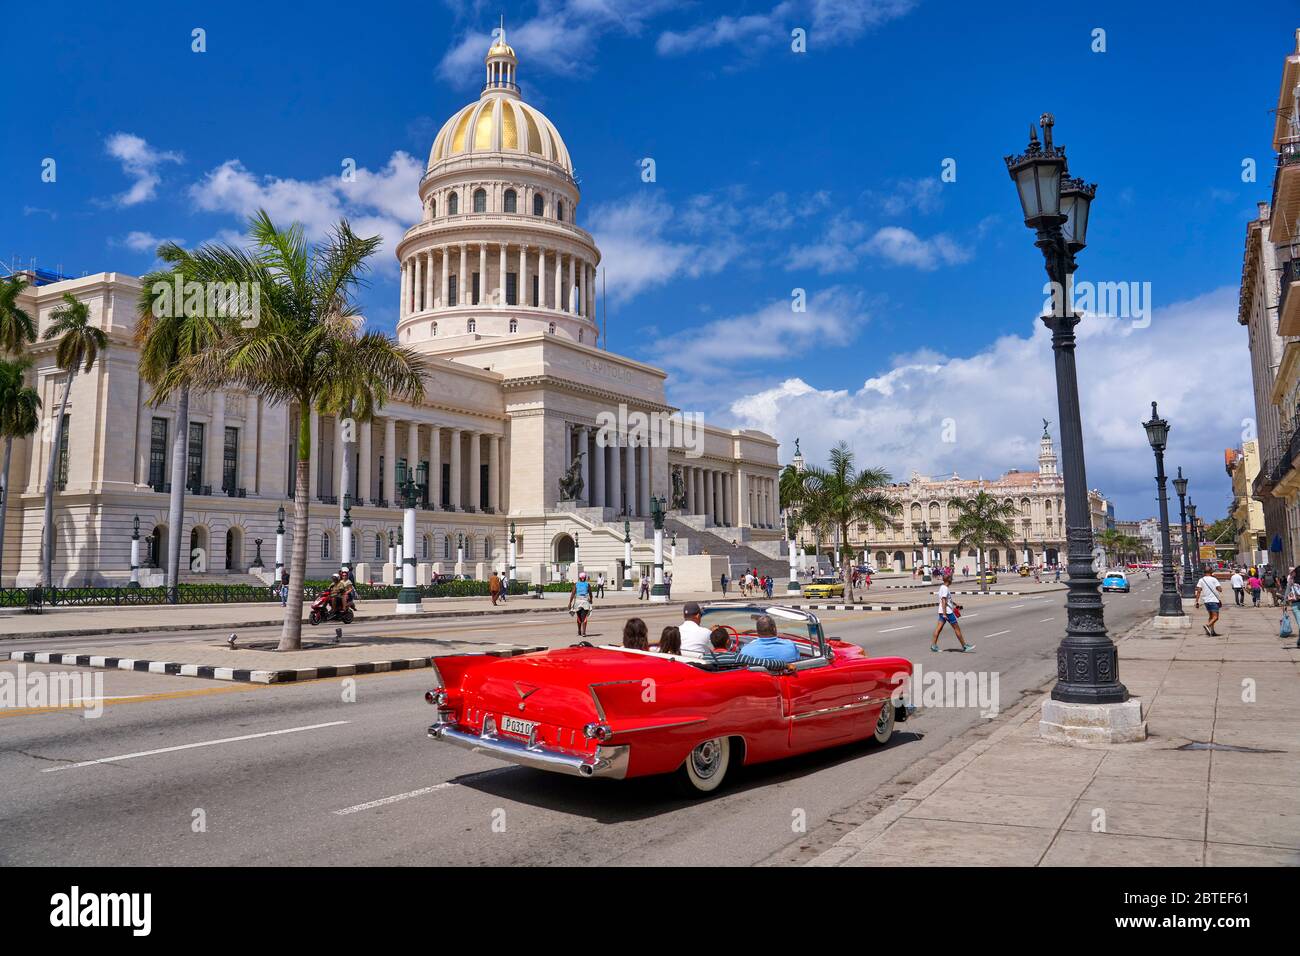 National Capitol Building und alte amerikanische rote Auto, Havanna, Kuba Stockfoto